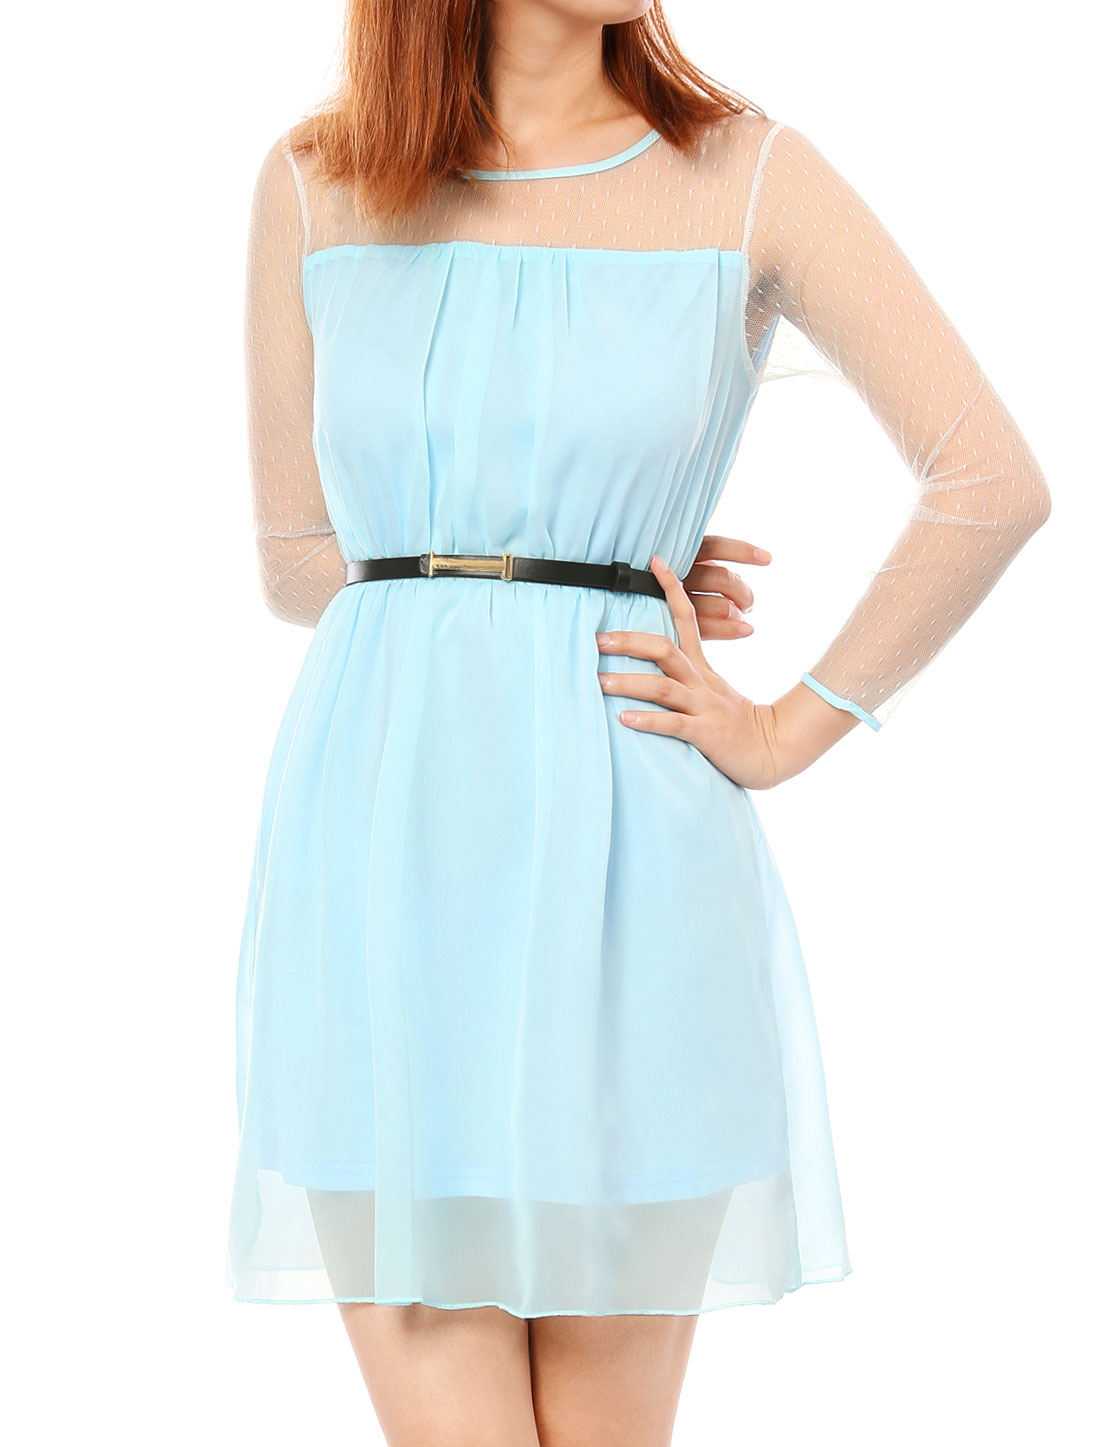 Unique Bargains Women's Sheer Mesh Yoke & Sleeve Dress with Belt Blue (Size S / 4)